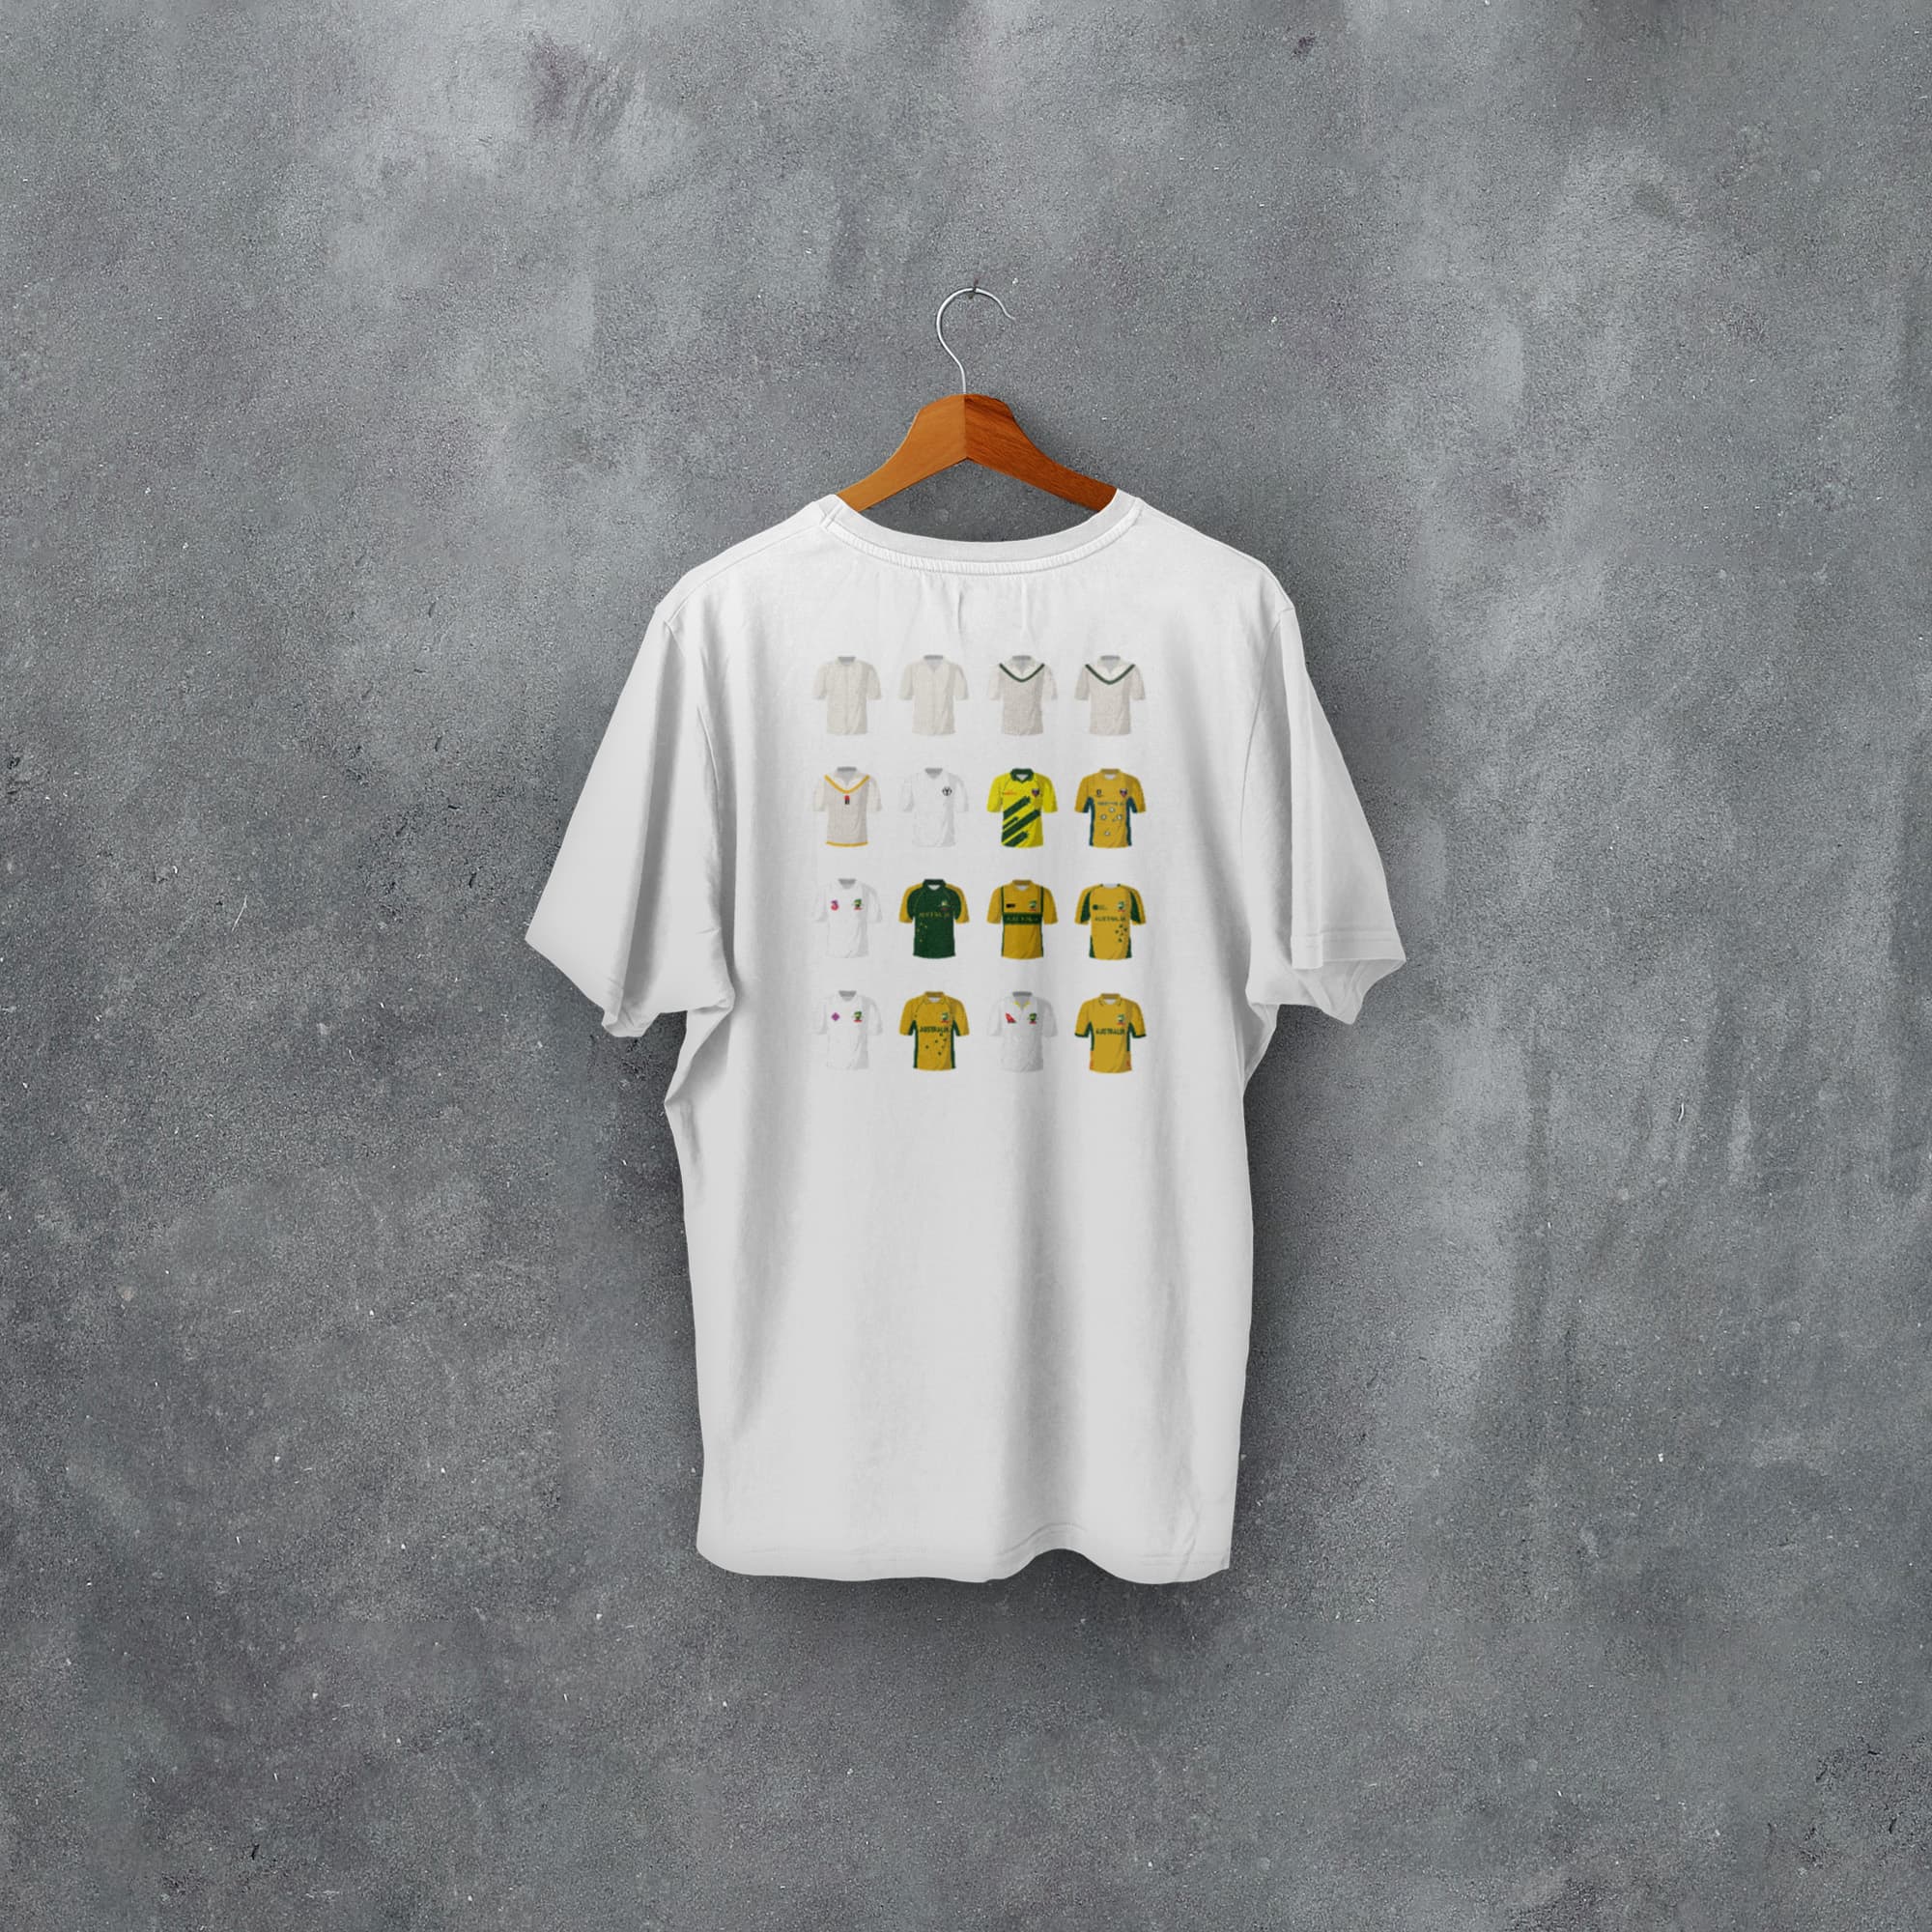 Australia Cricket Classic Kits T-Shirt